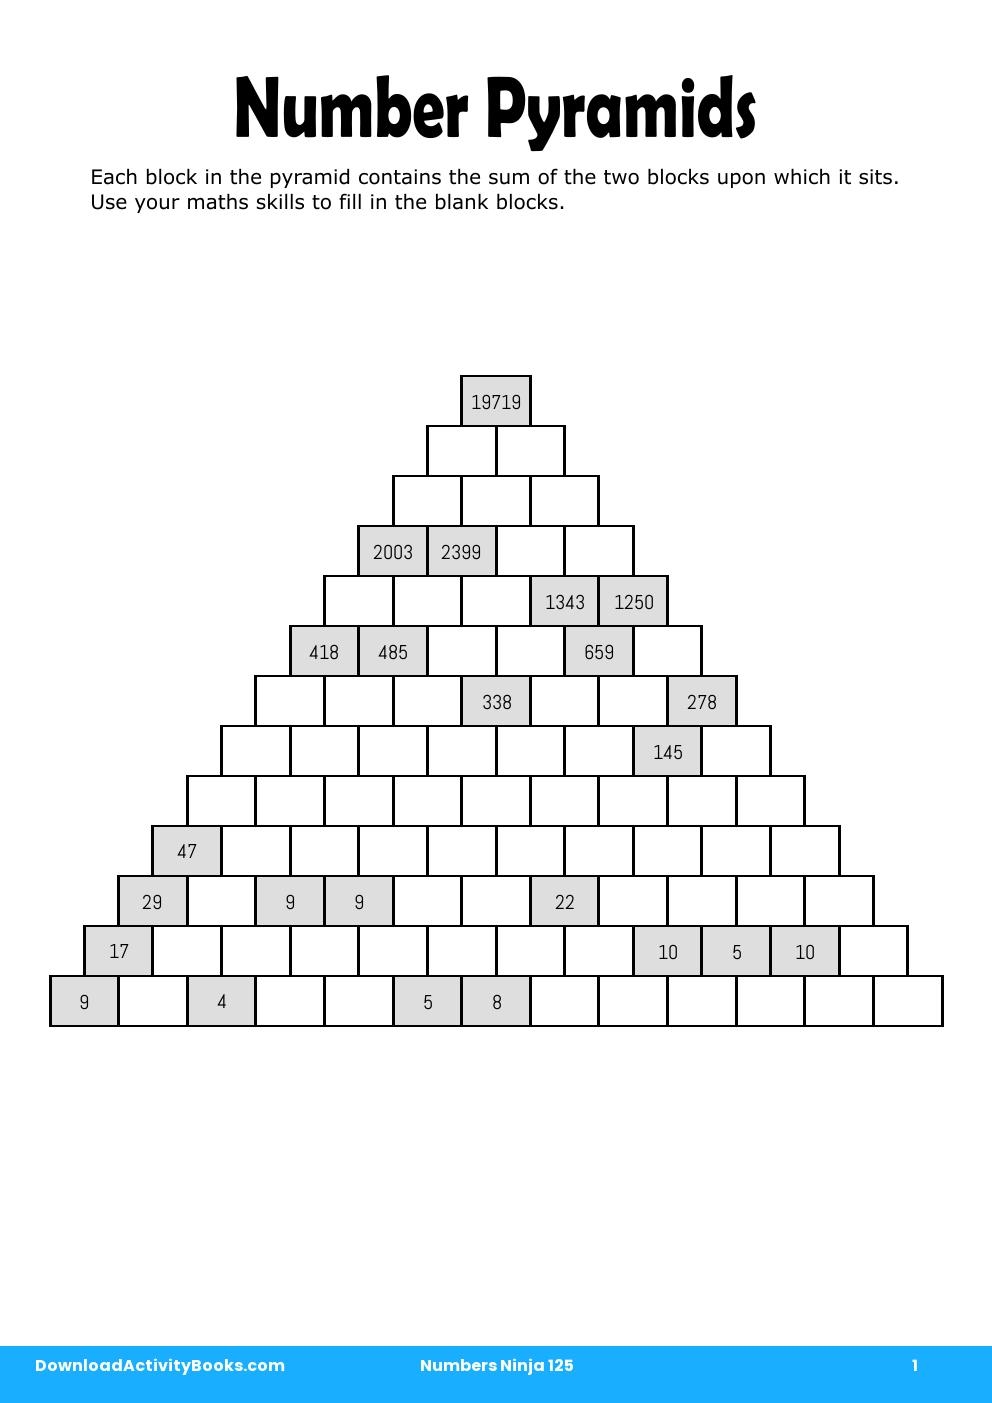 Number Pyramids in Numbers Ninja 125